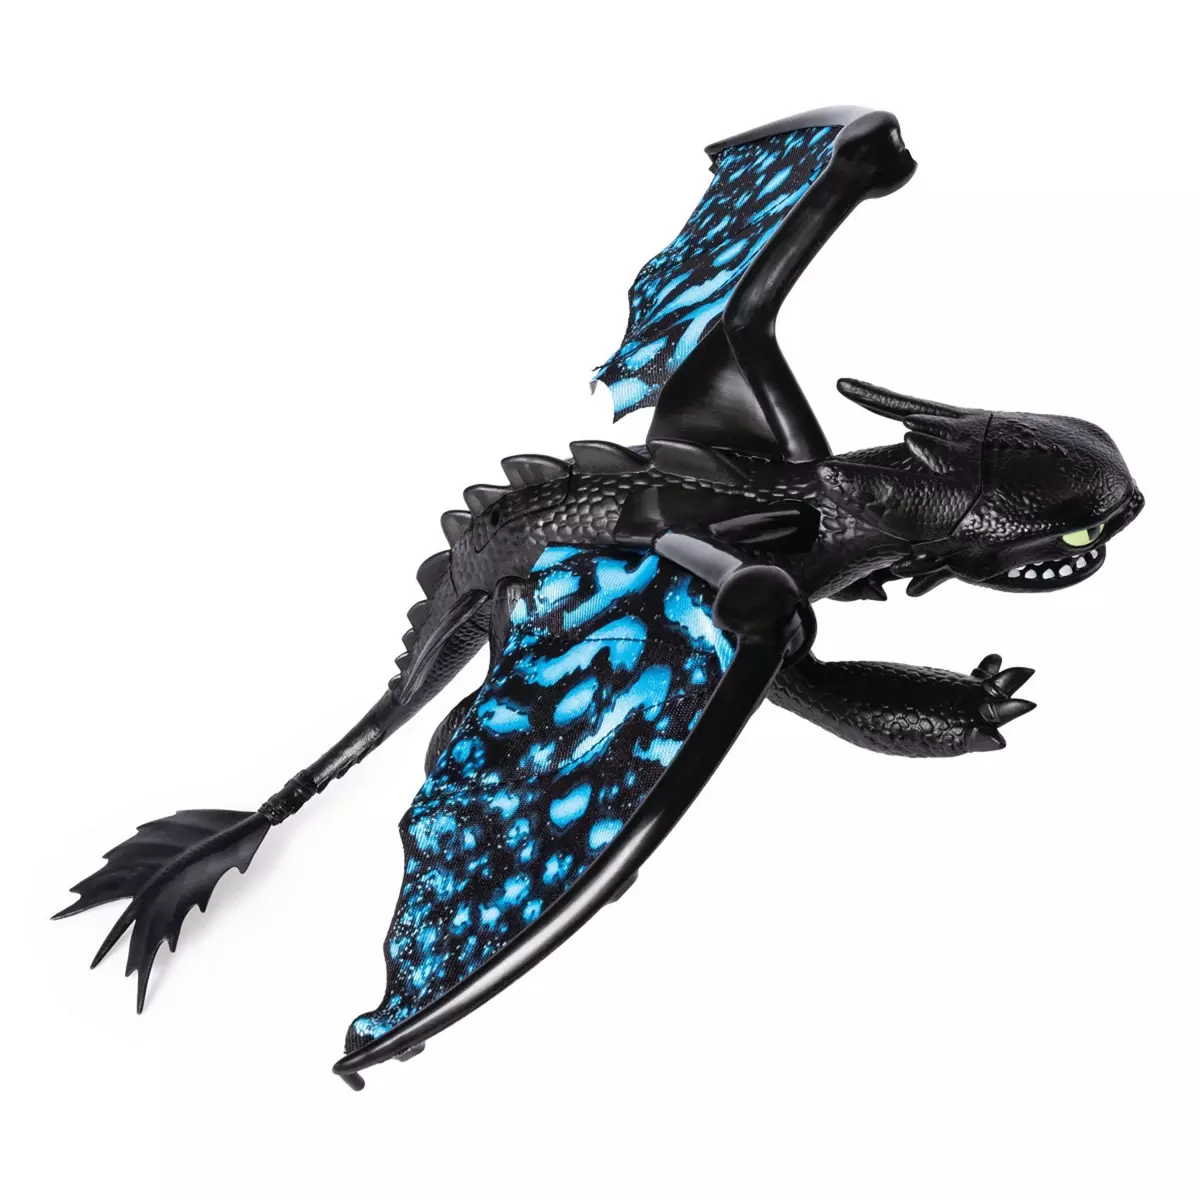 SPIN MASTER Figurine de luxe Krokmou - Dragons 3 Le monde caché